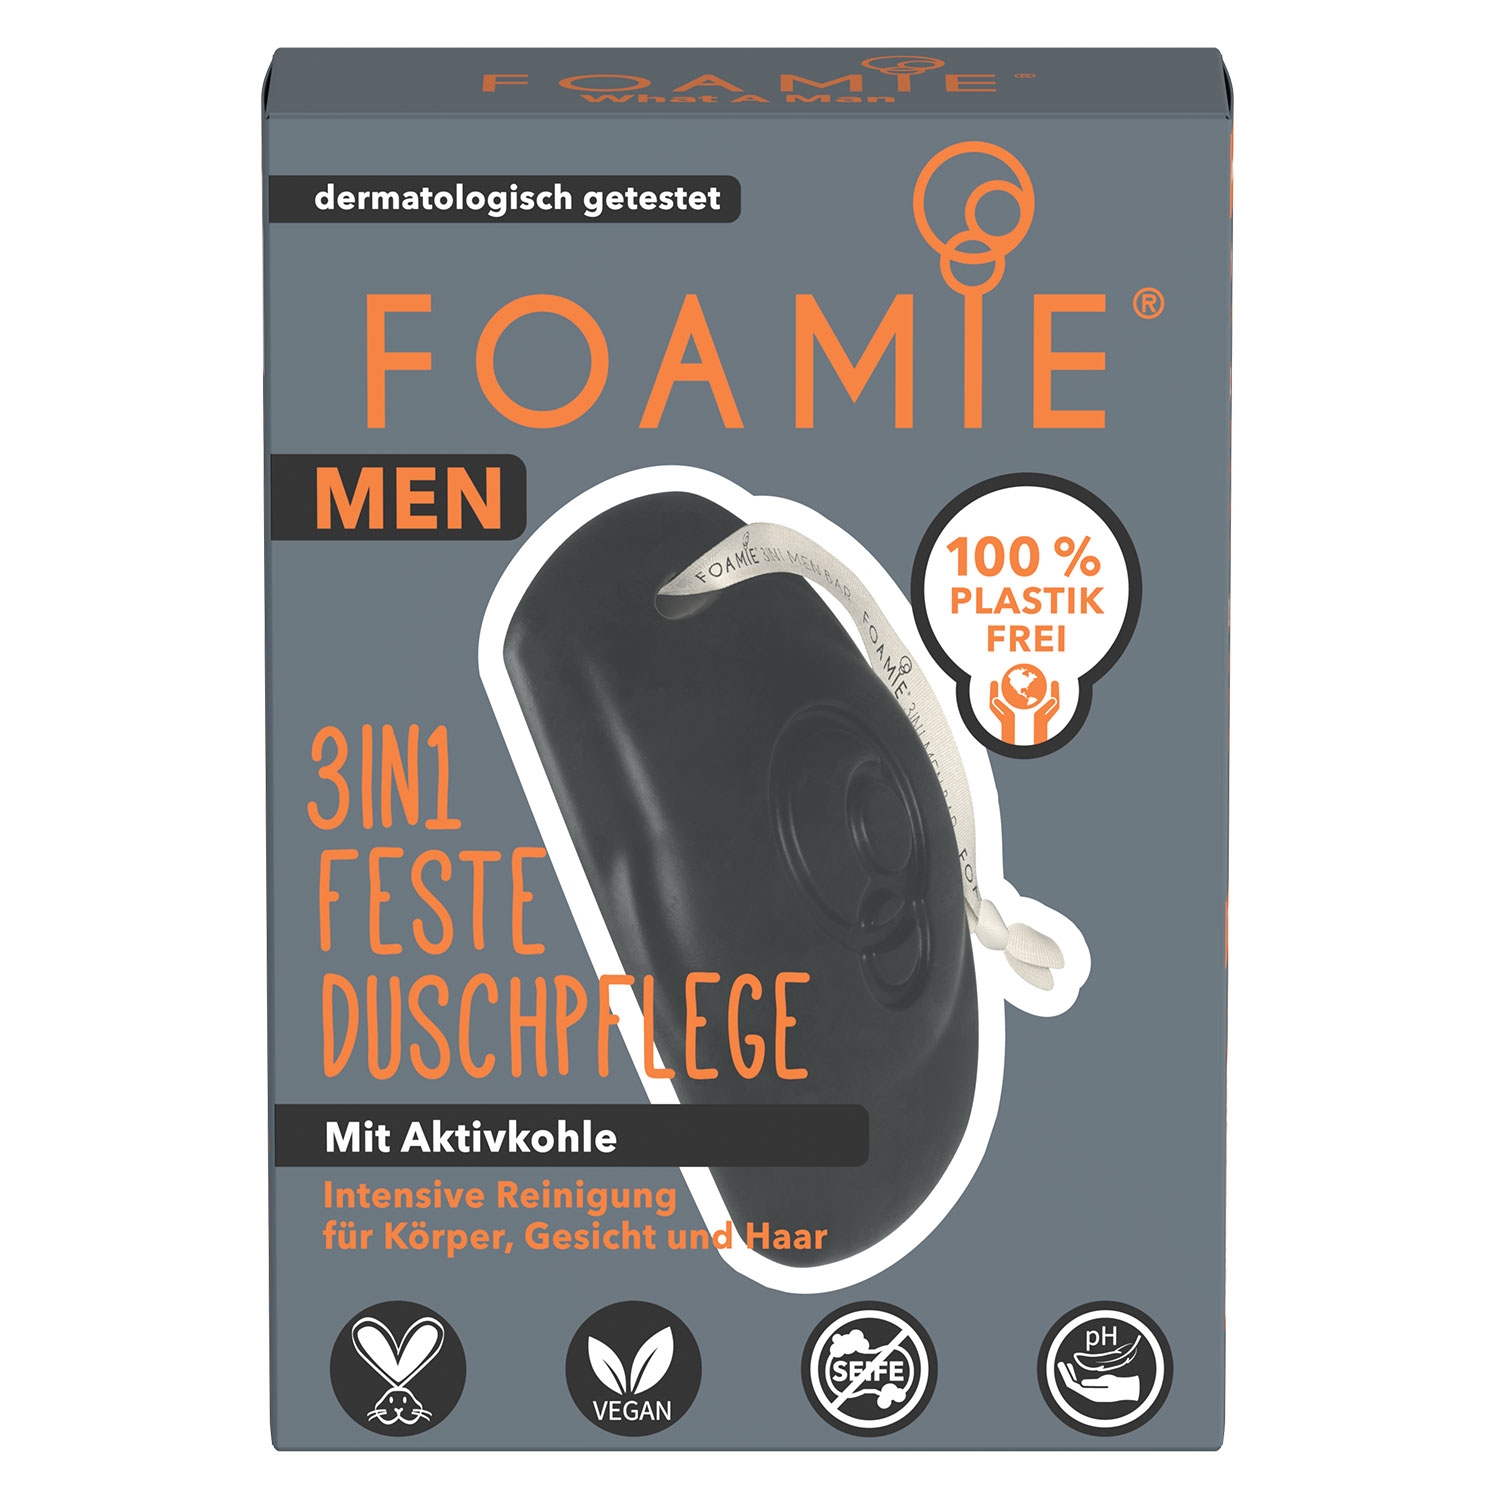 Product image from Foamie - Men 3in1 Feste Duschpflege What a Man